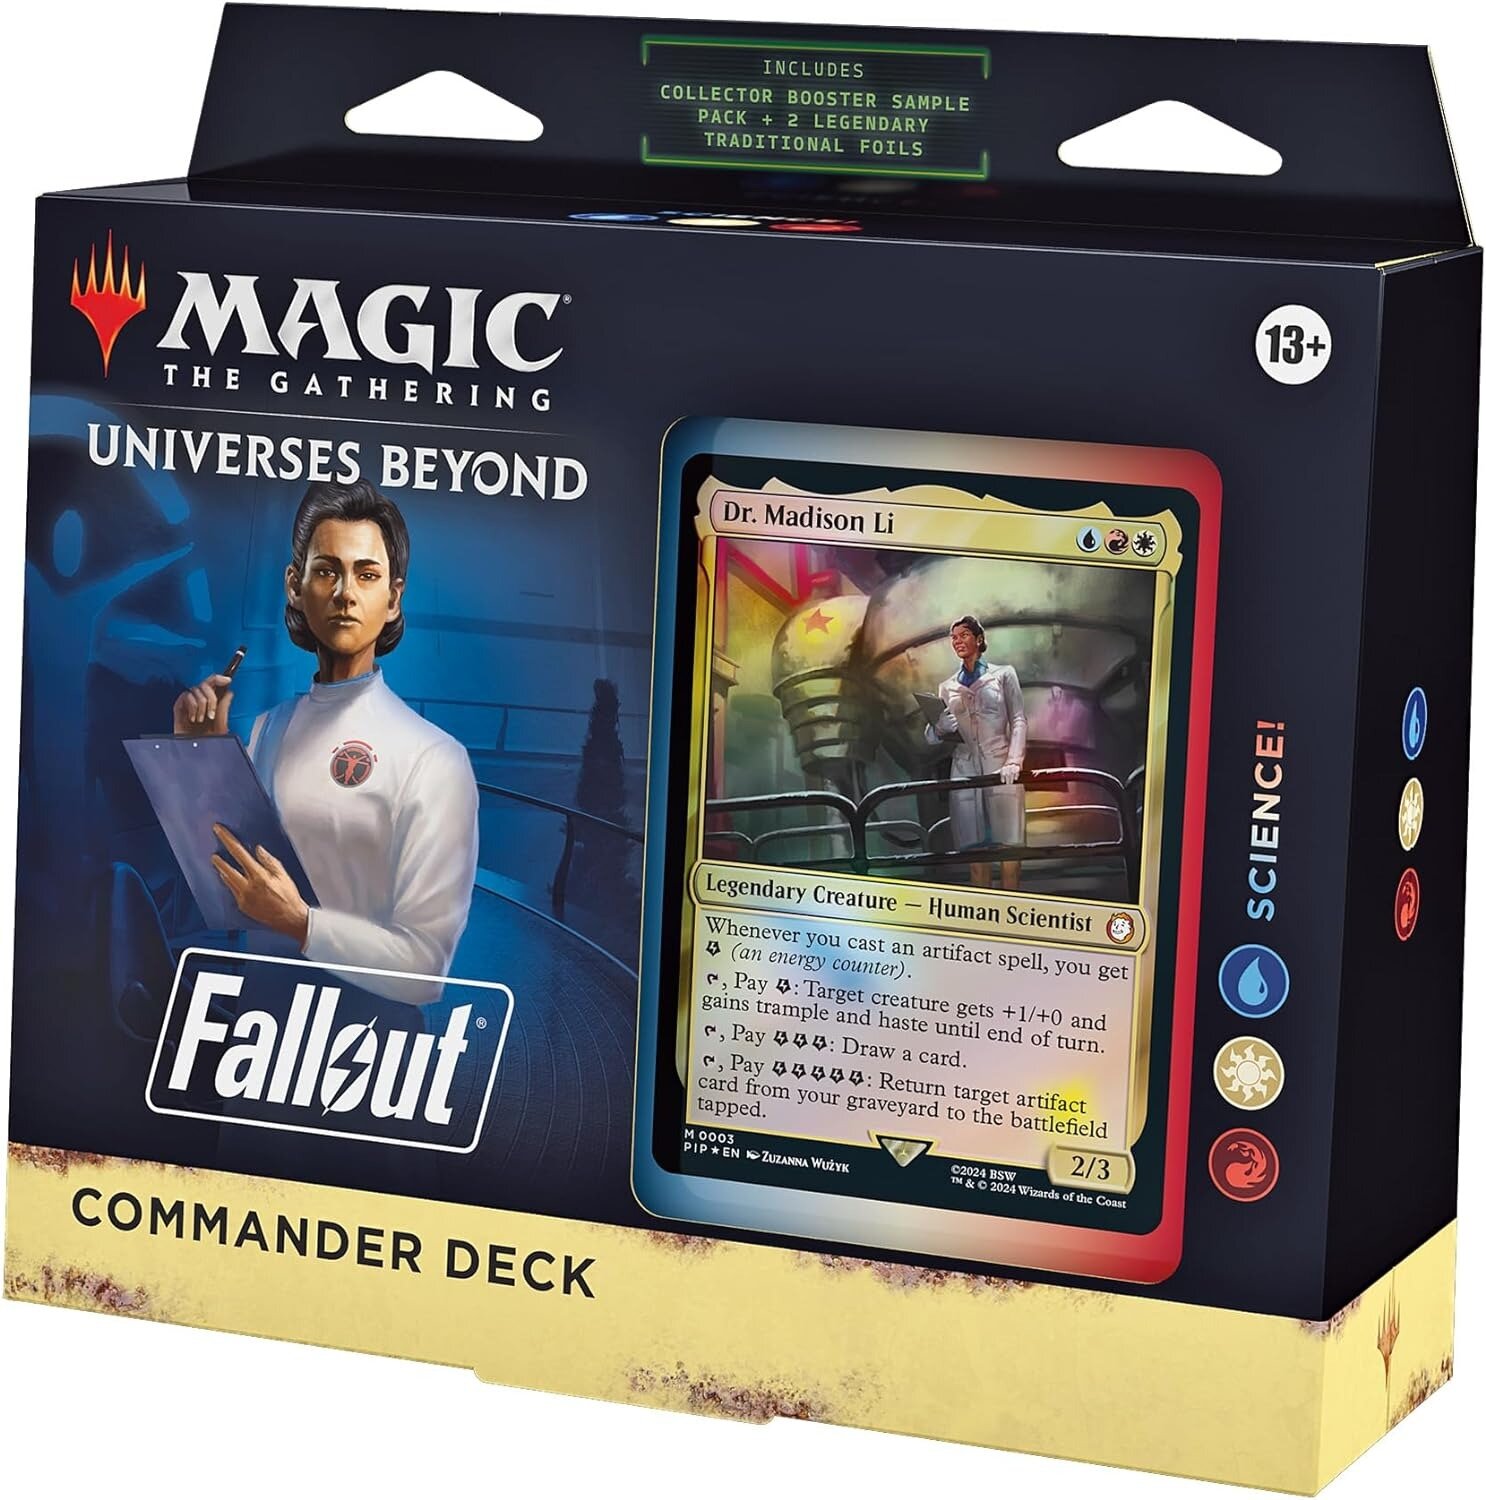 Magic The Gathering: Колода MTG Commander Deck Science! издания Universes Beyond Fallout на английском